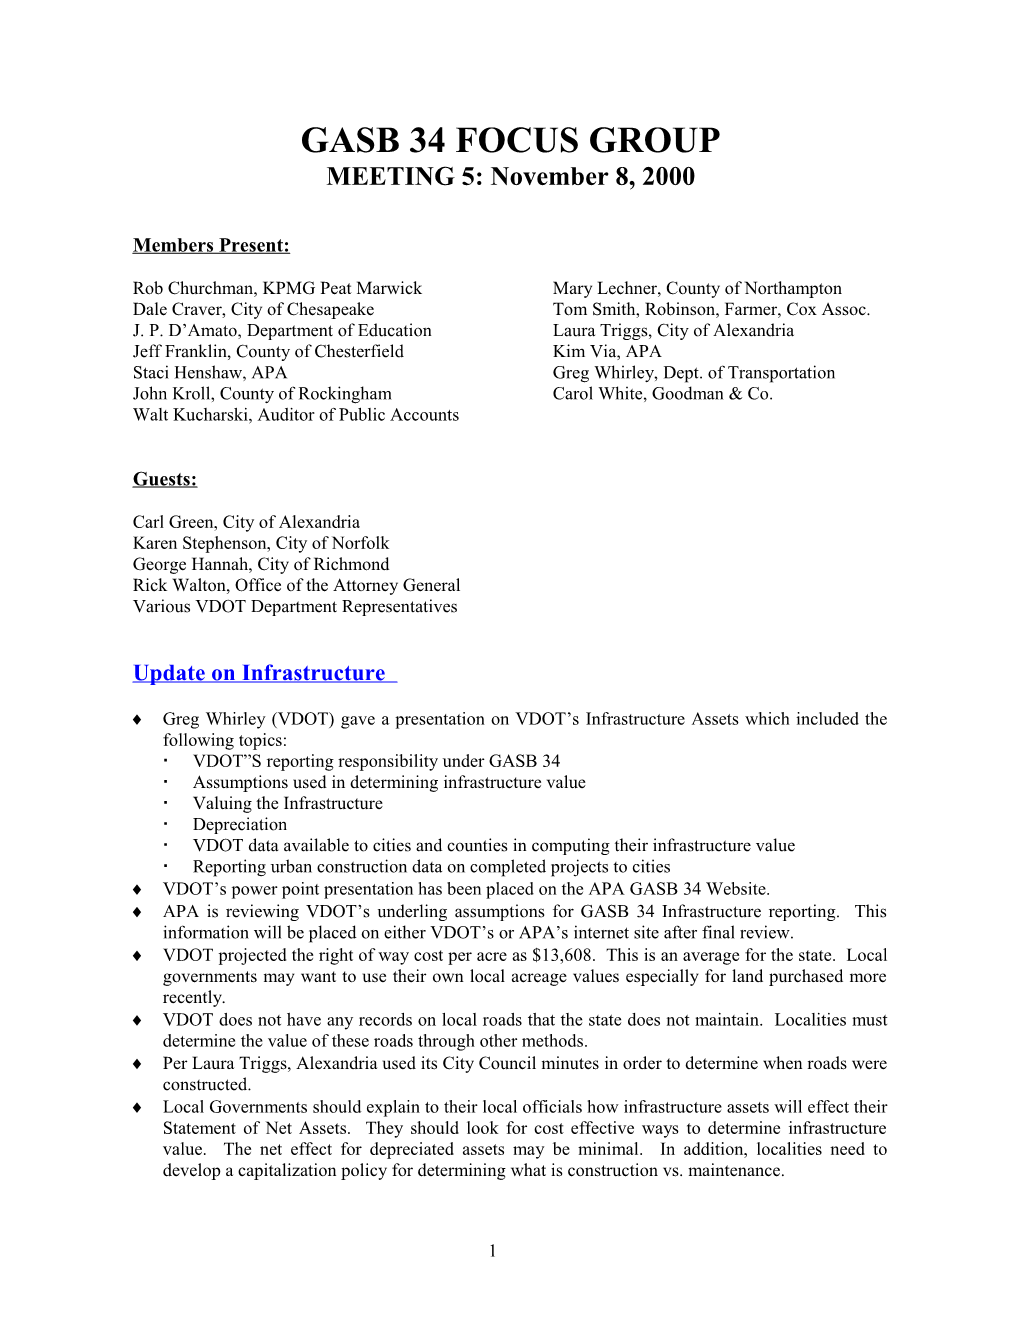 Novermber 8, 2000 - Meeting Highlights